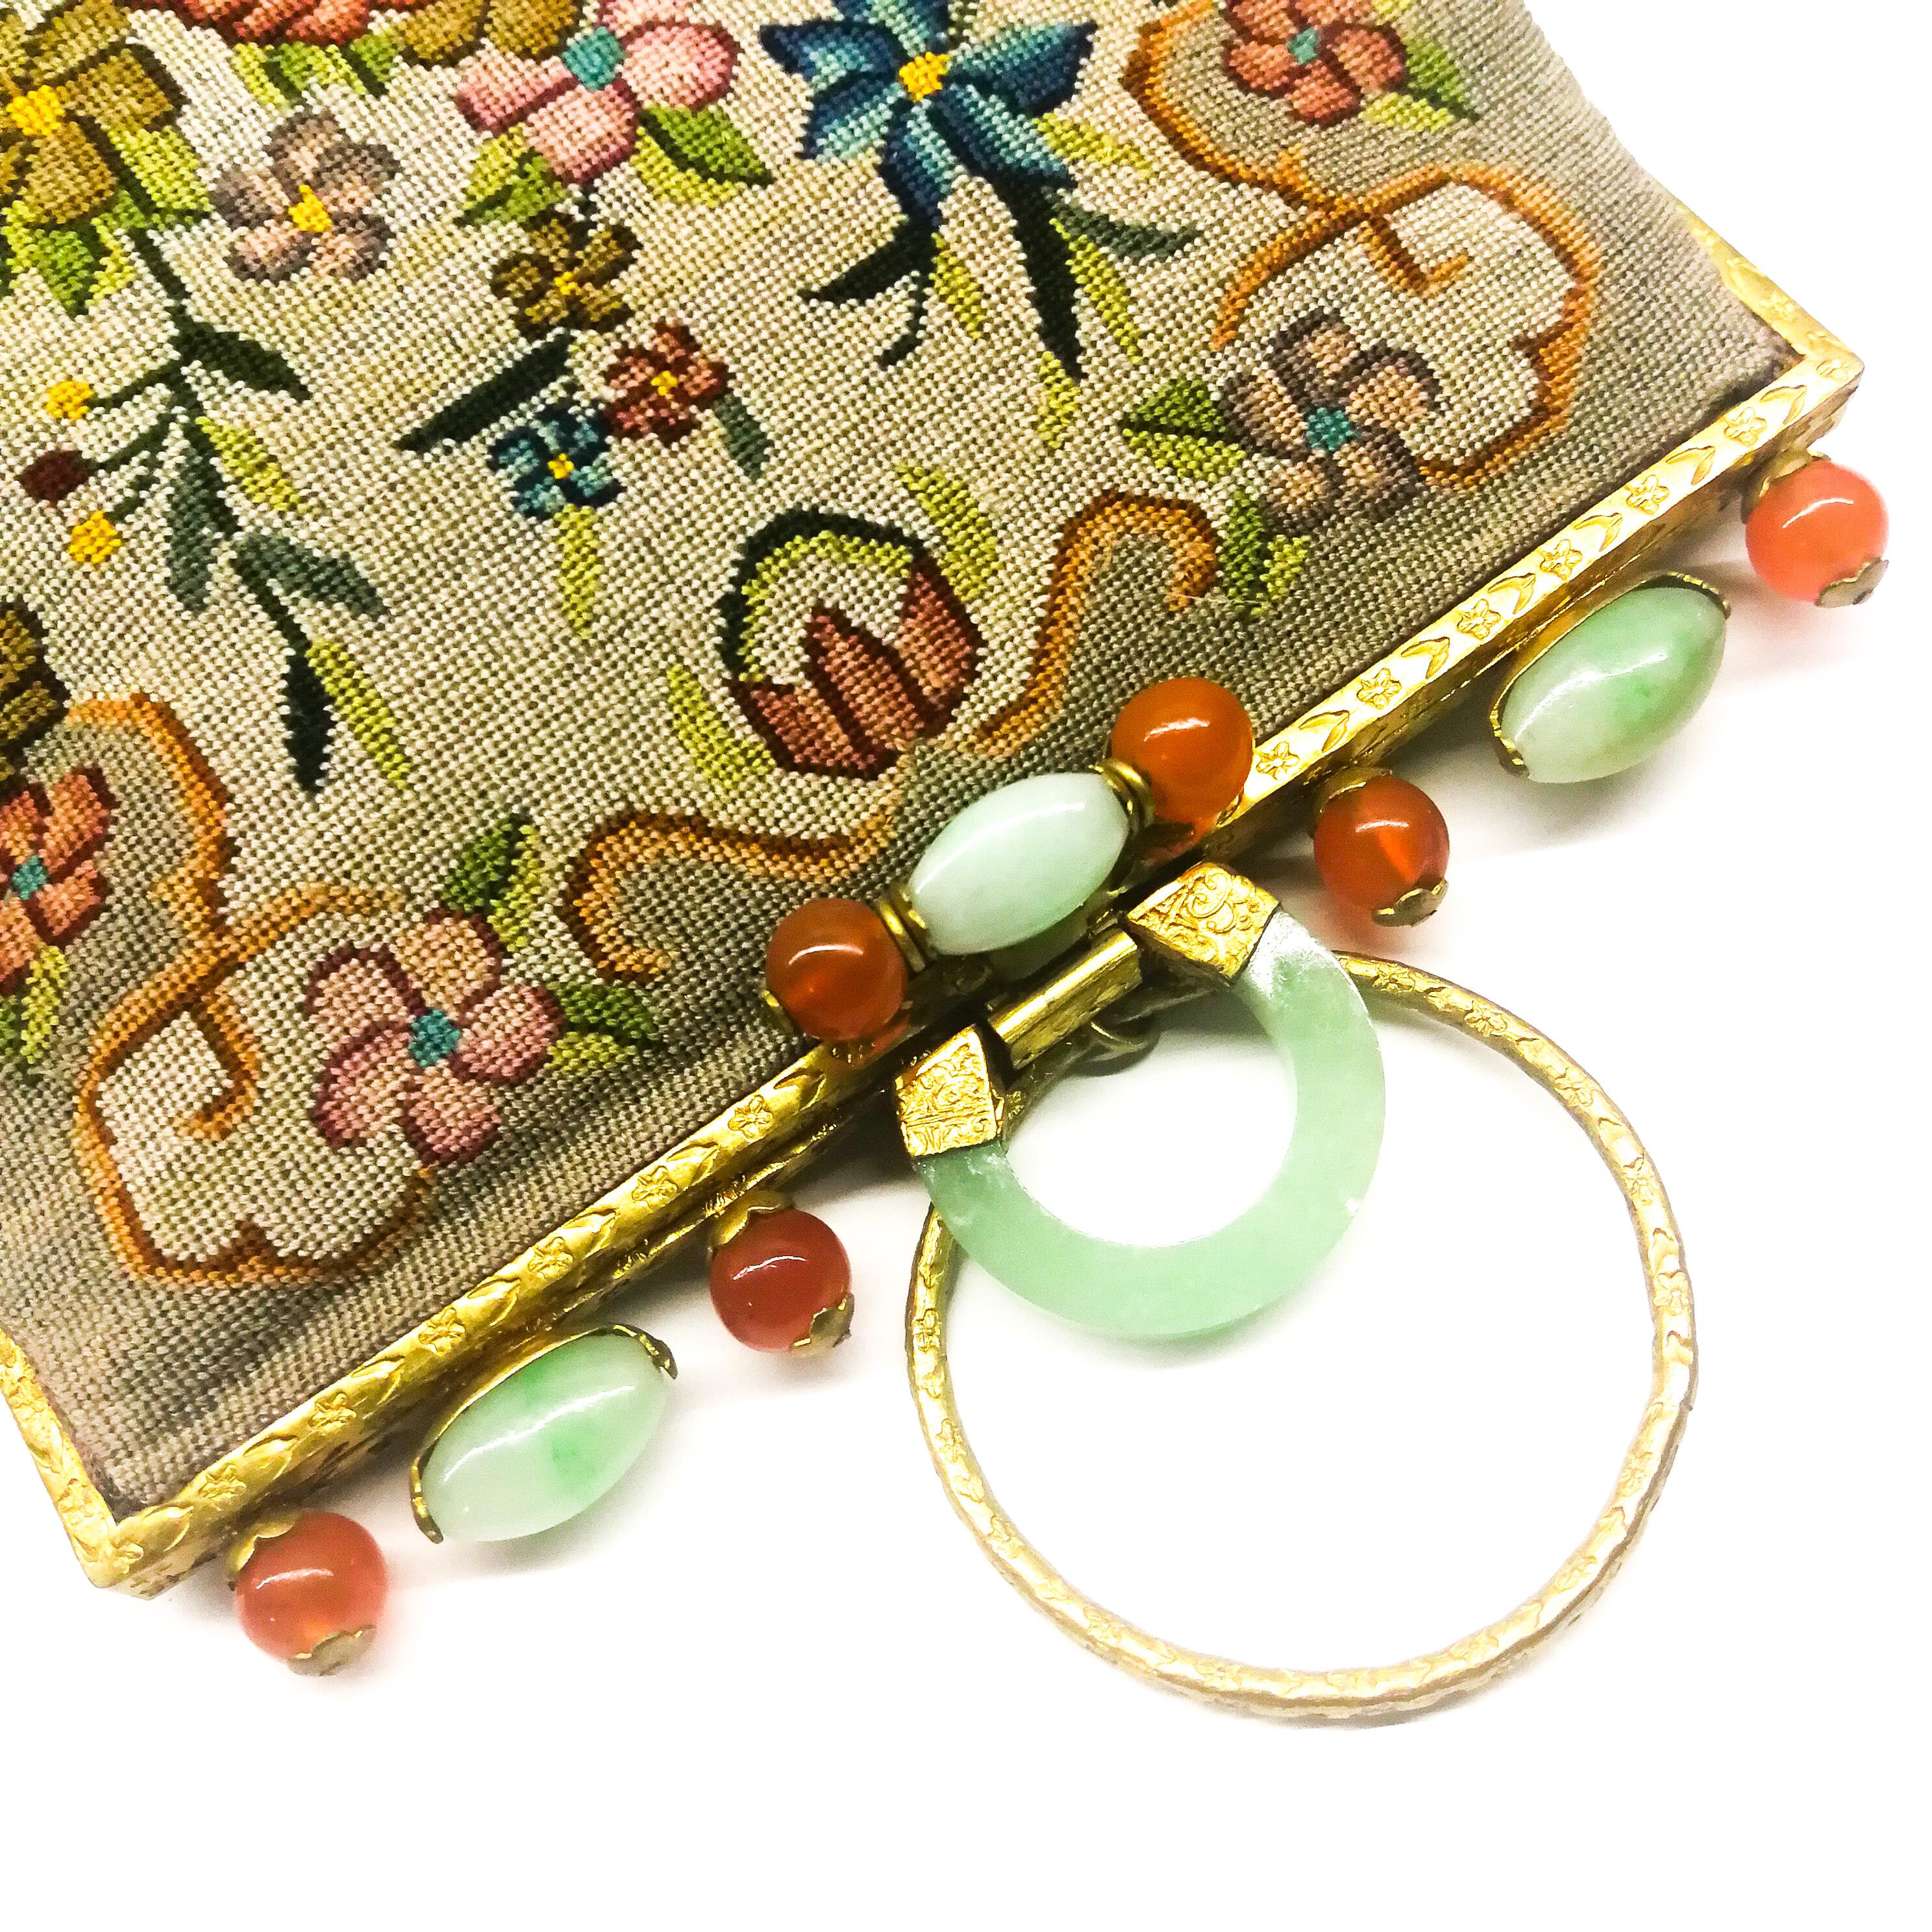 Brown An Art Deco exquisite jade and cornelian stone frame petitpoint handbag, 1920s.